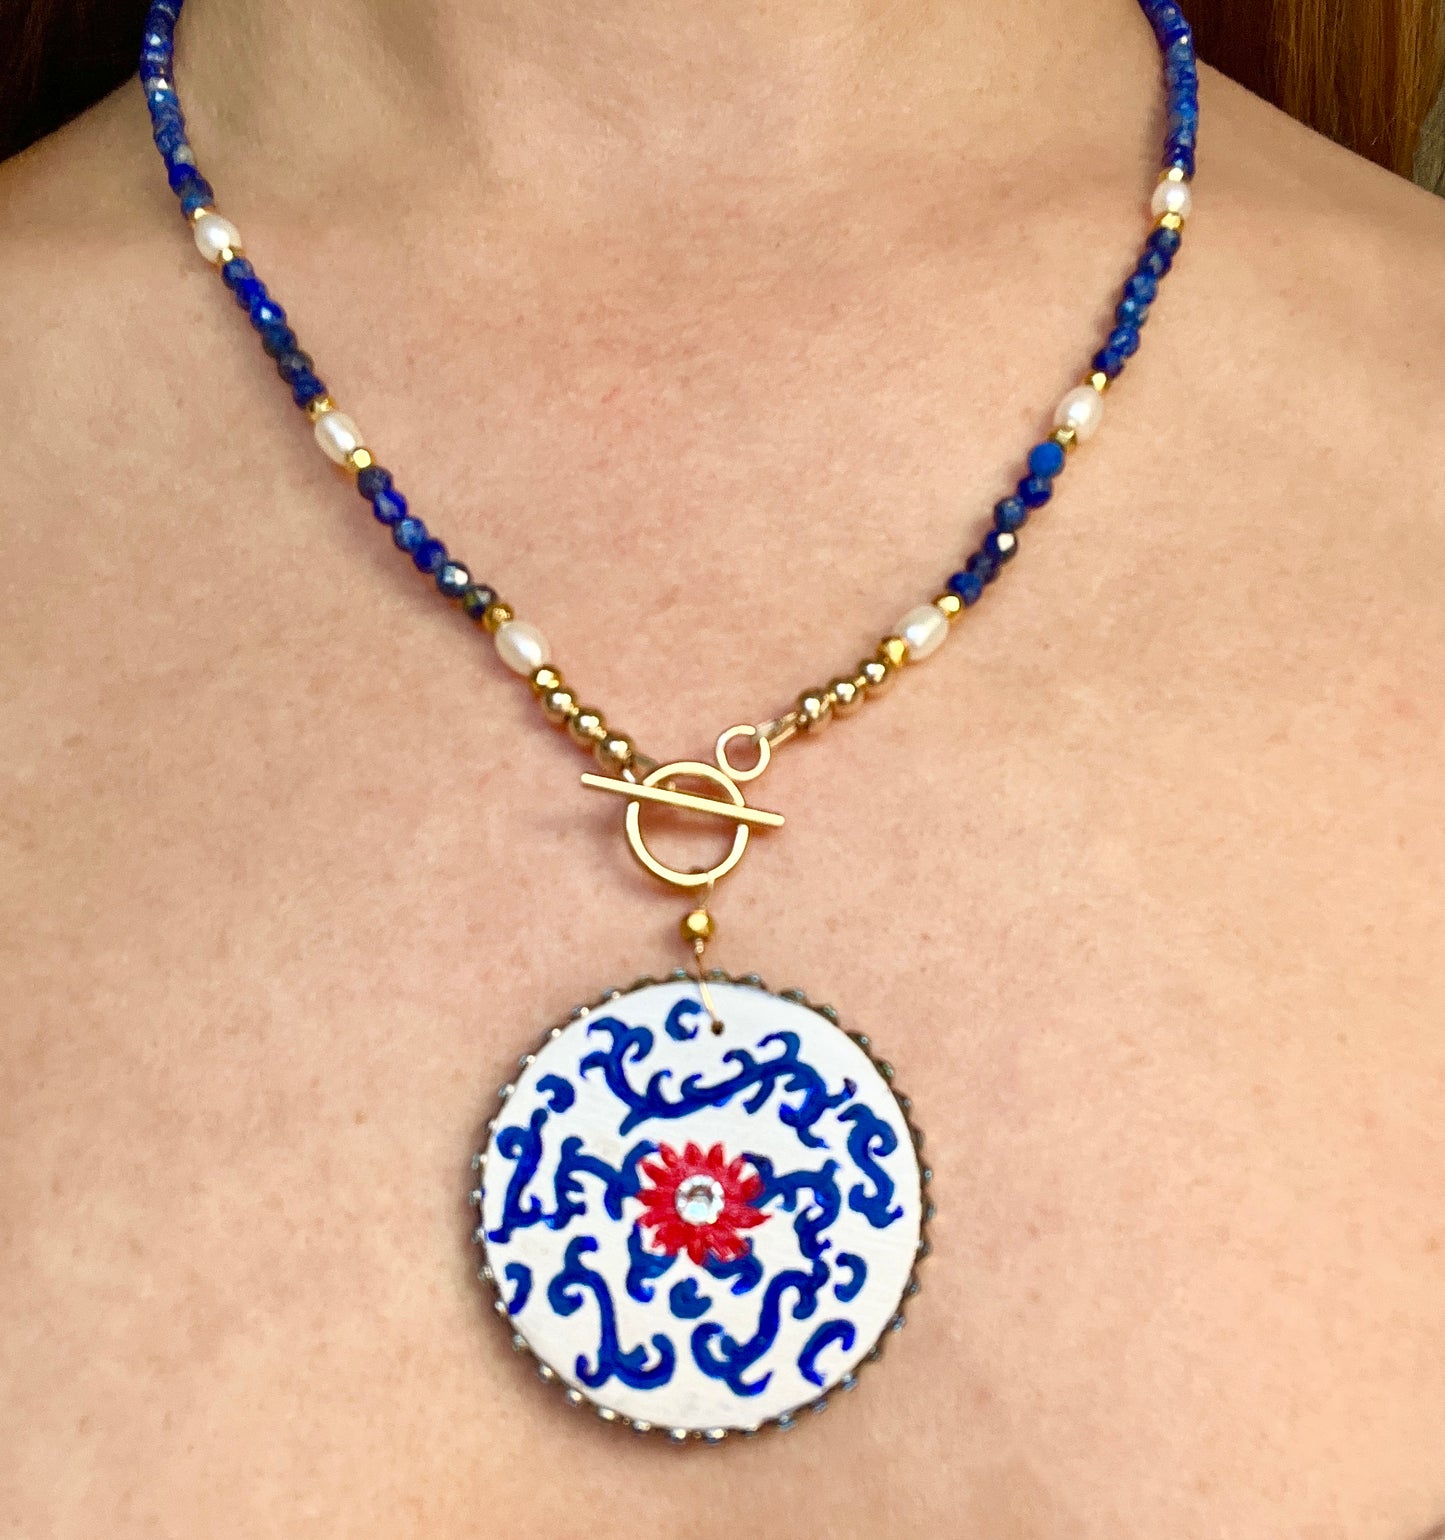 Lapis lazuli necklace with hand painted pendant - Amaria Studio